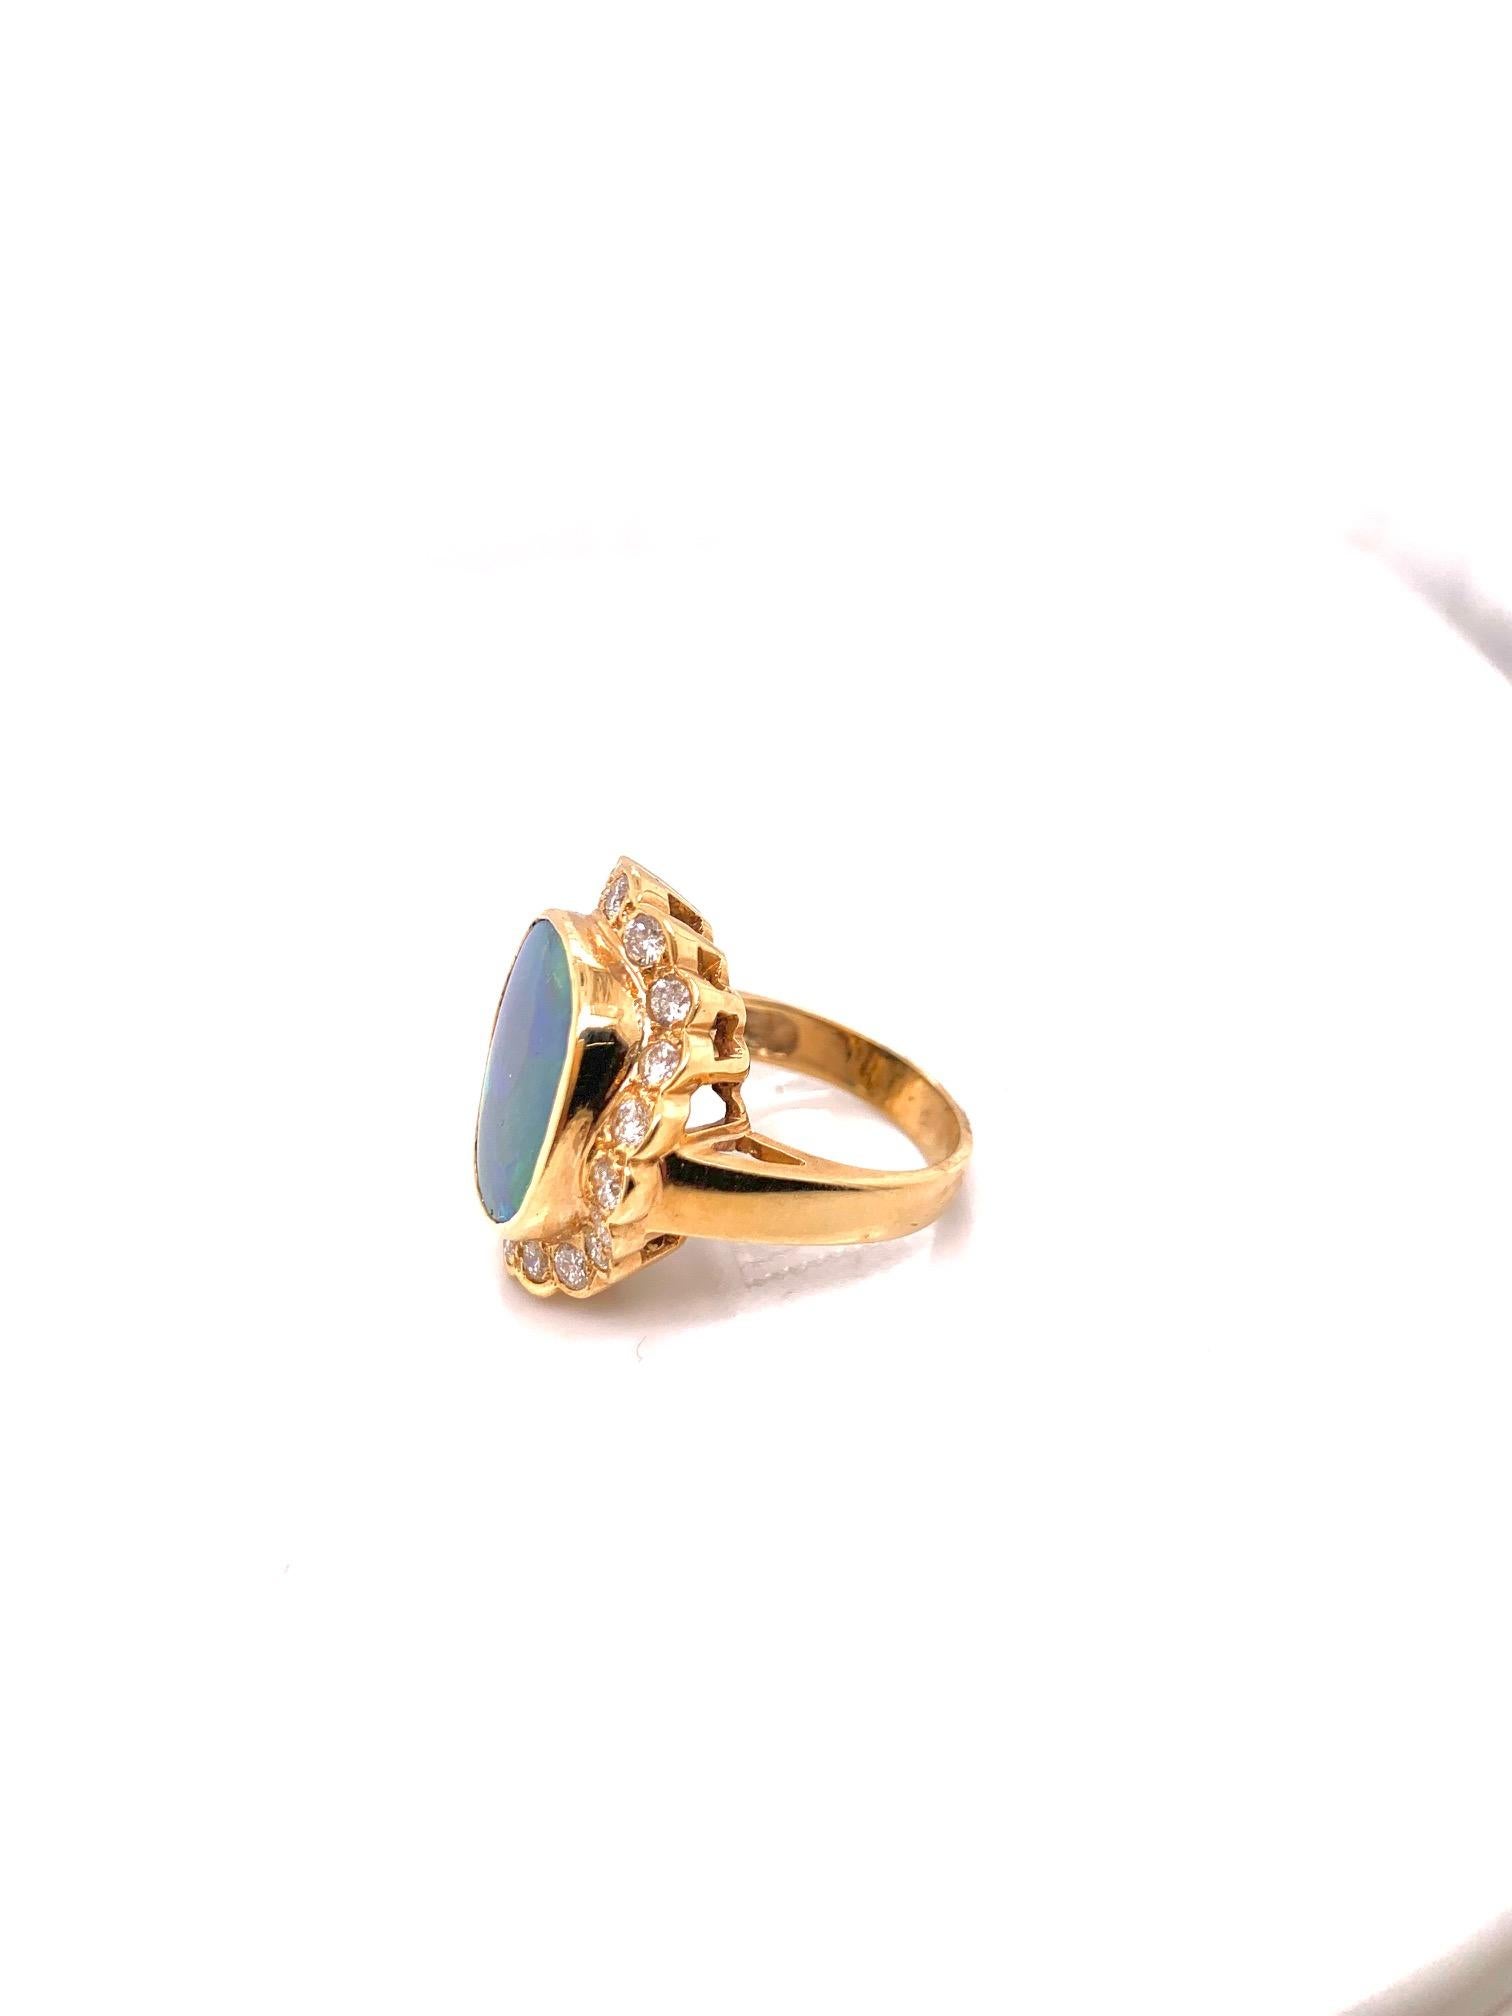 Phenomenal Black Opal and Diamond Ring 

Stones: Natural Black Opal 
Stone Dimensions: 13.3x15.5mm
Stones: Diamond
Stone Clarity: VS/SI Clarity
Stones: 20 Round Diamonds 
Stone Carat Weight: 1.01 Carat 
Material: 14K Yellow 


